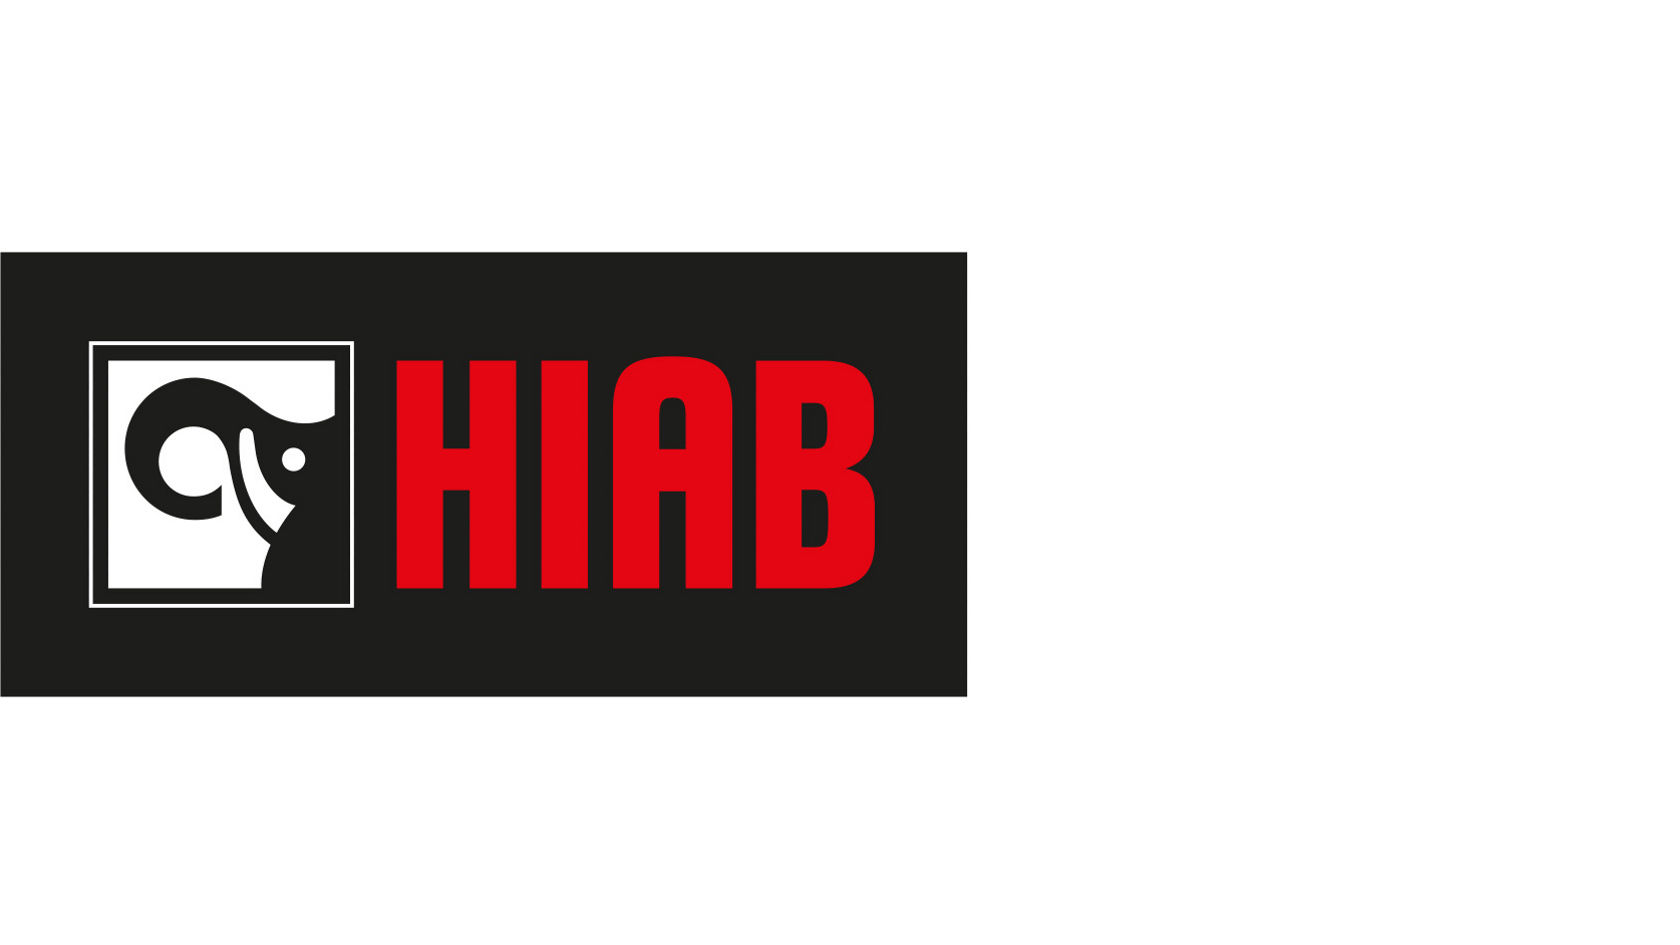 Hiab Germany GmbH